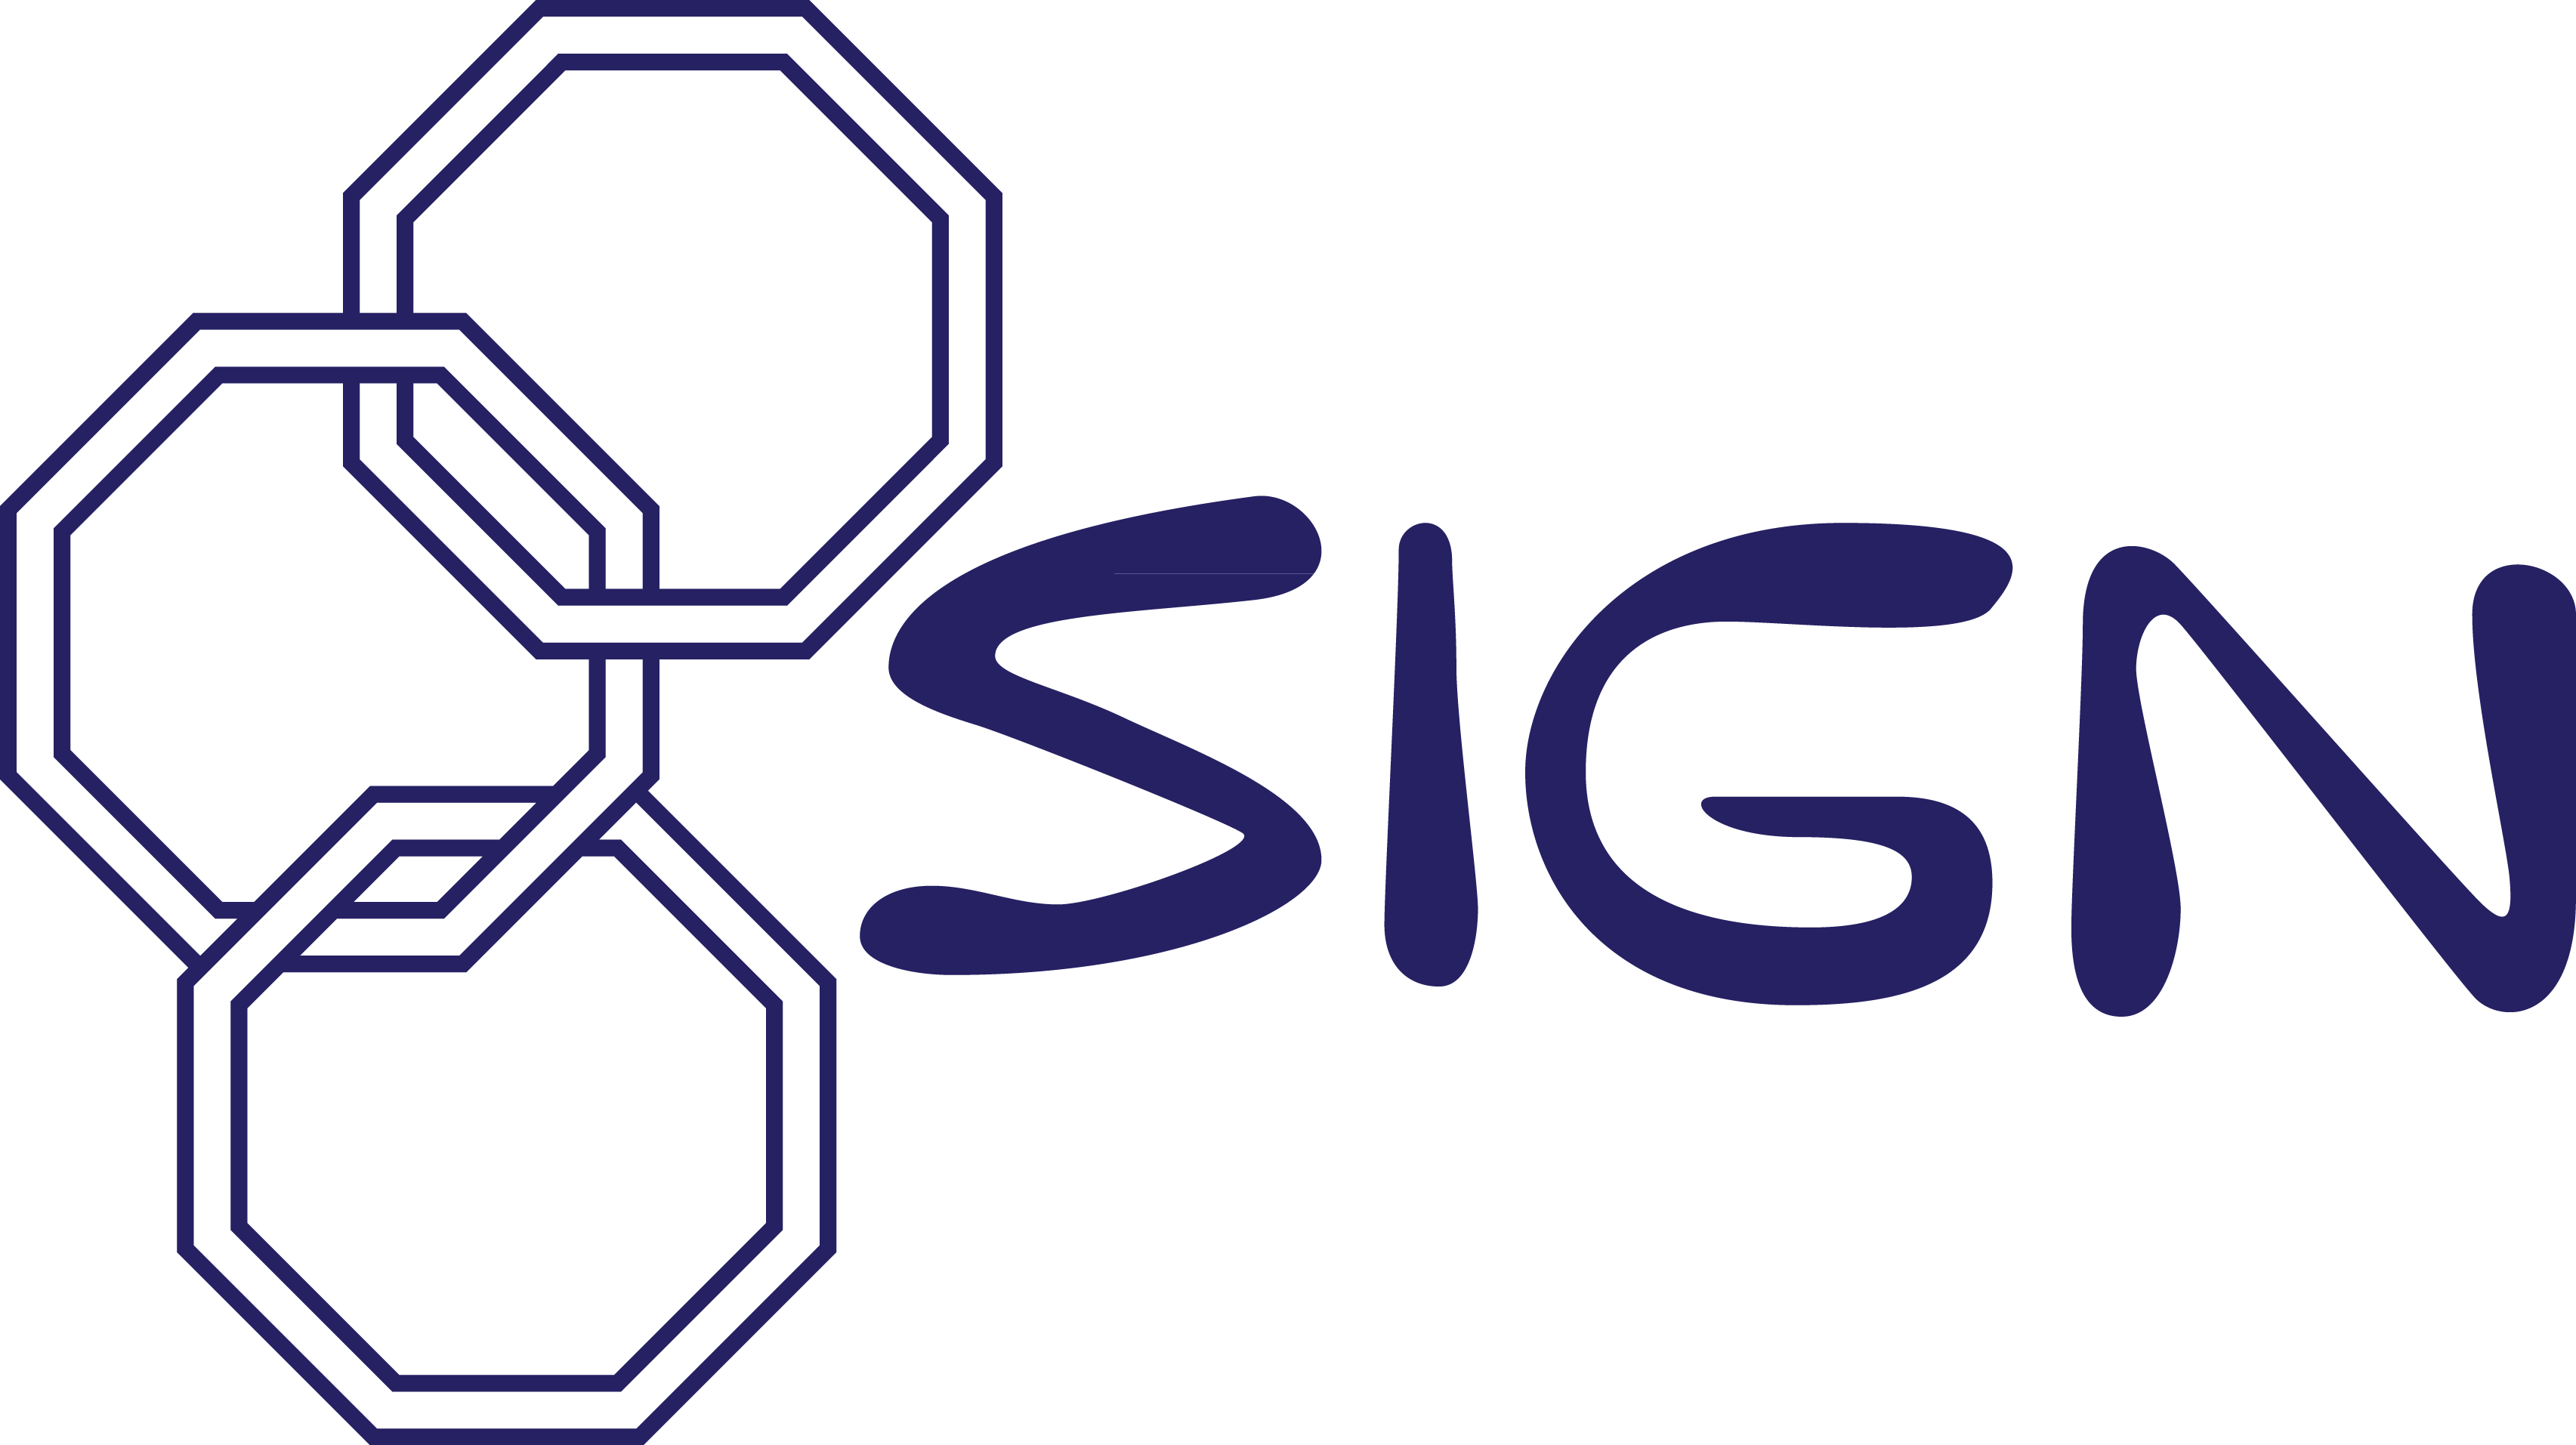 Sign Logo - Sign Logo PNG Transparent Sign Logo.PNG Images. | PlusPNG